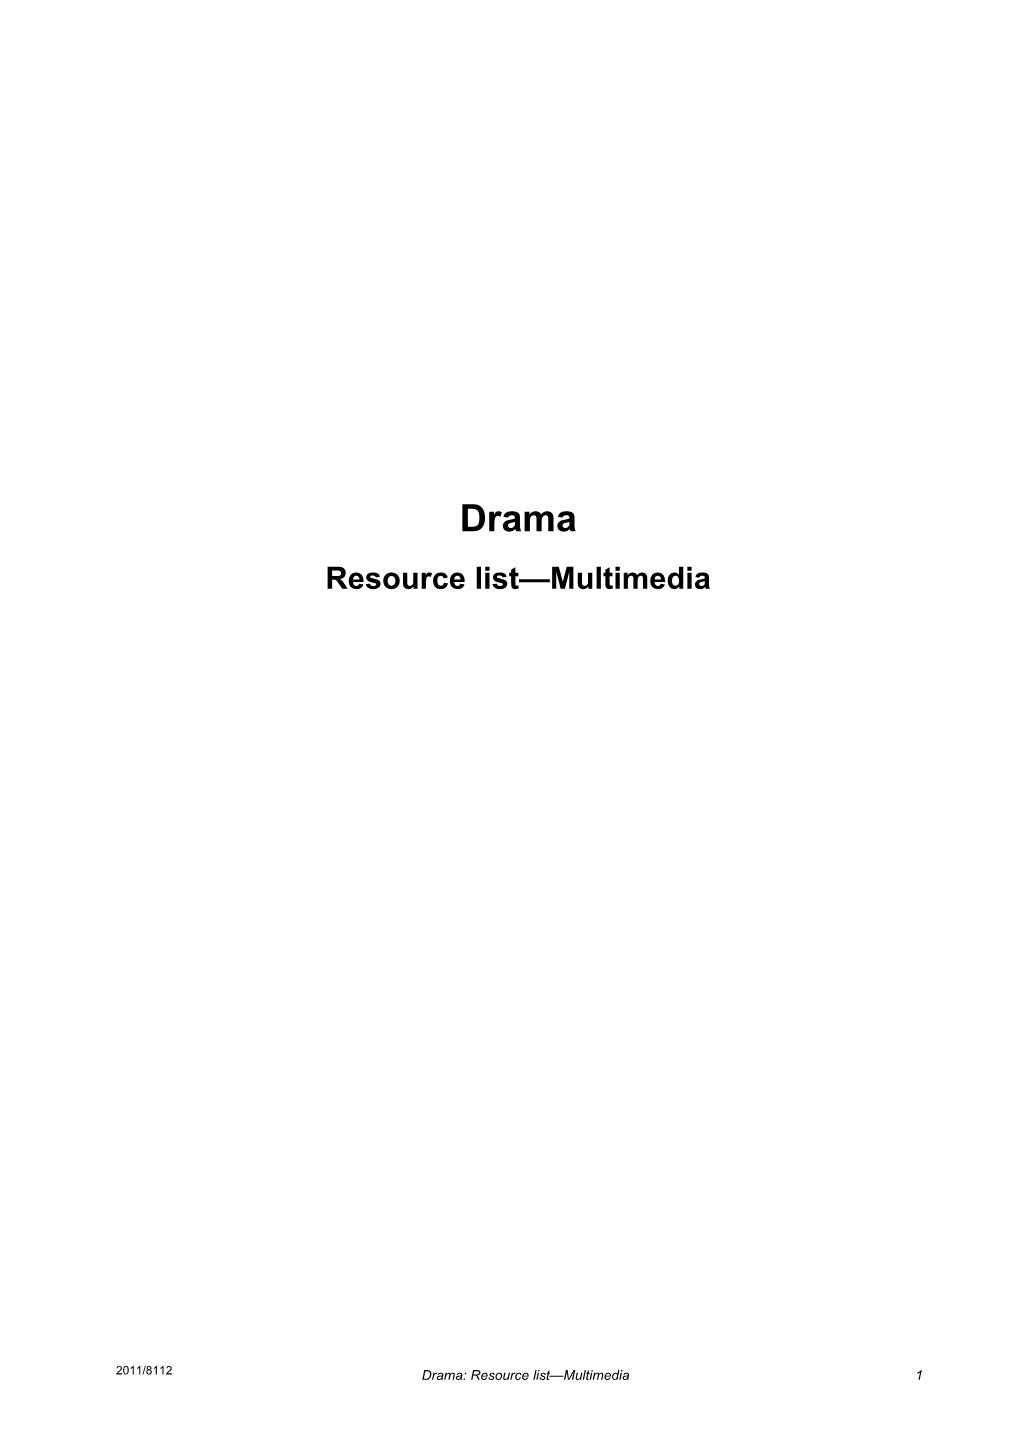 Drama Resource Lists Multimedia